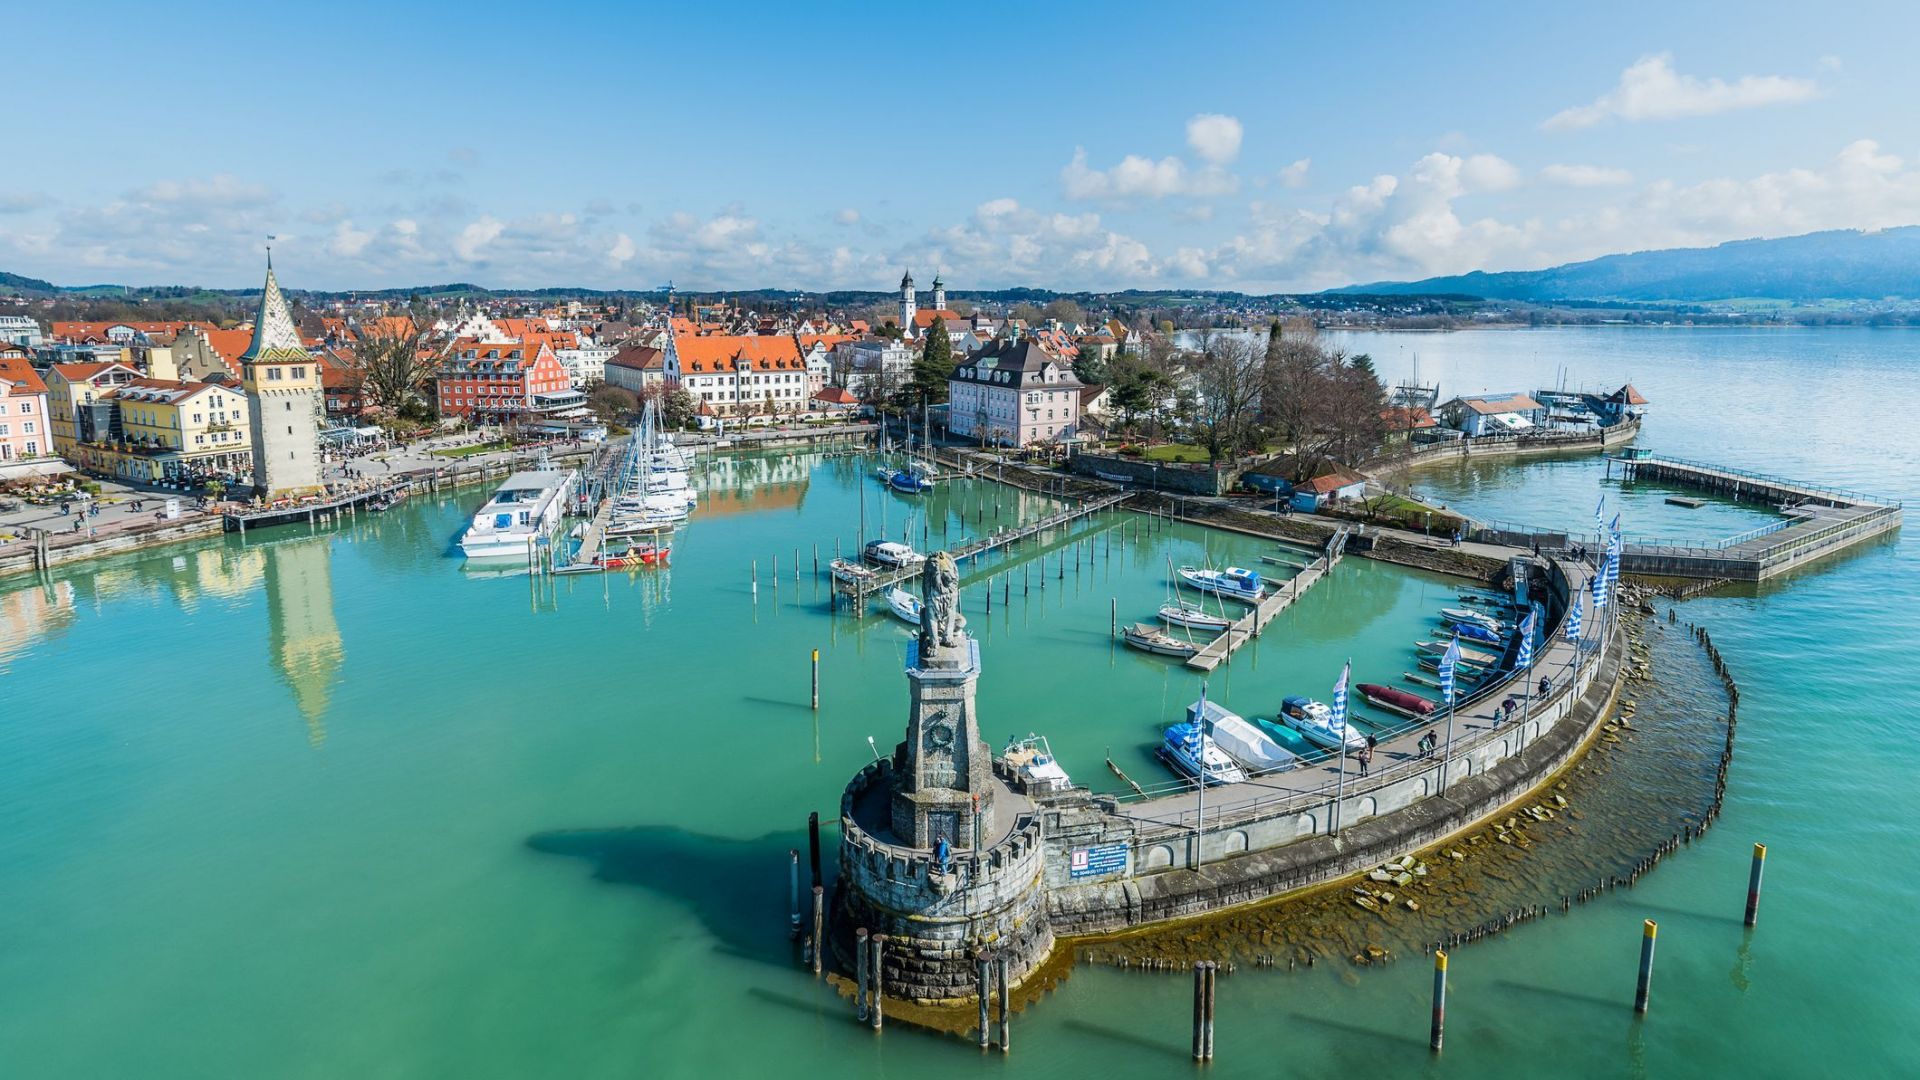 Lindau/Lake Constance: Harbor entrance with the Bavarian Lion statue